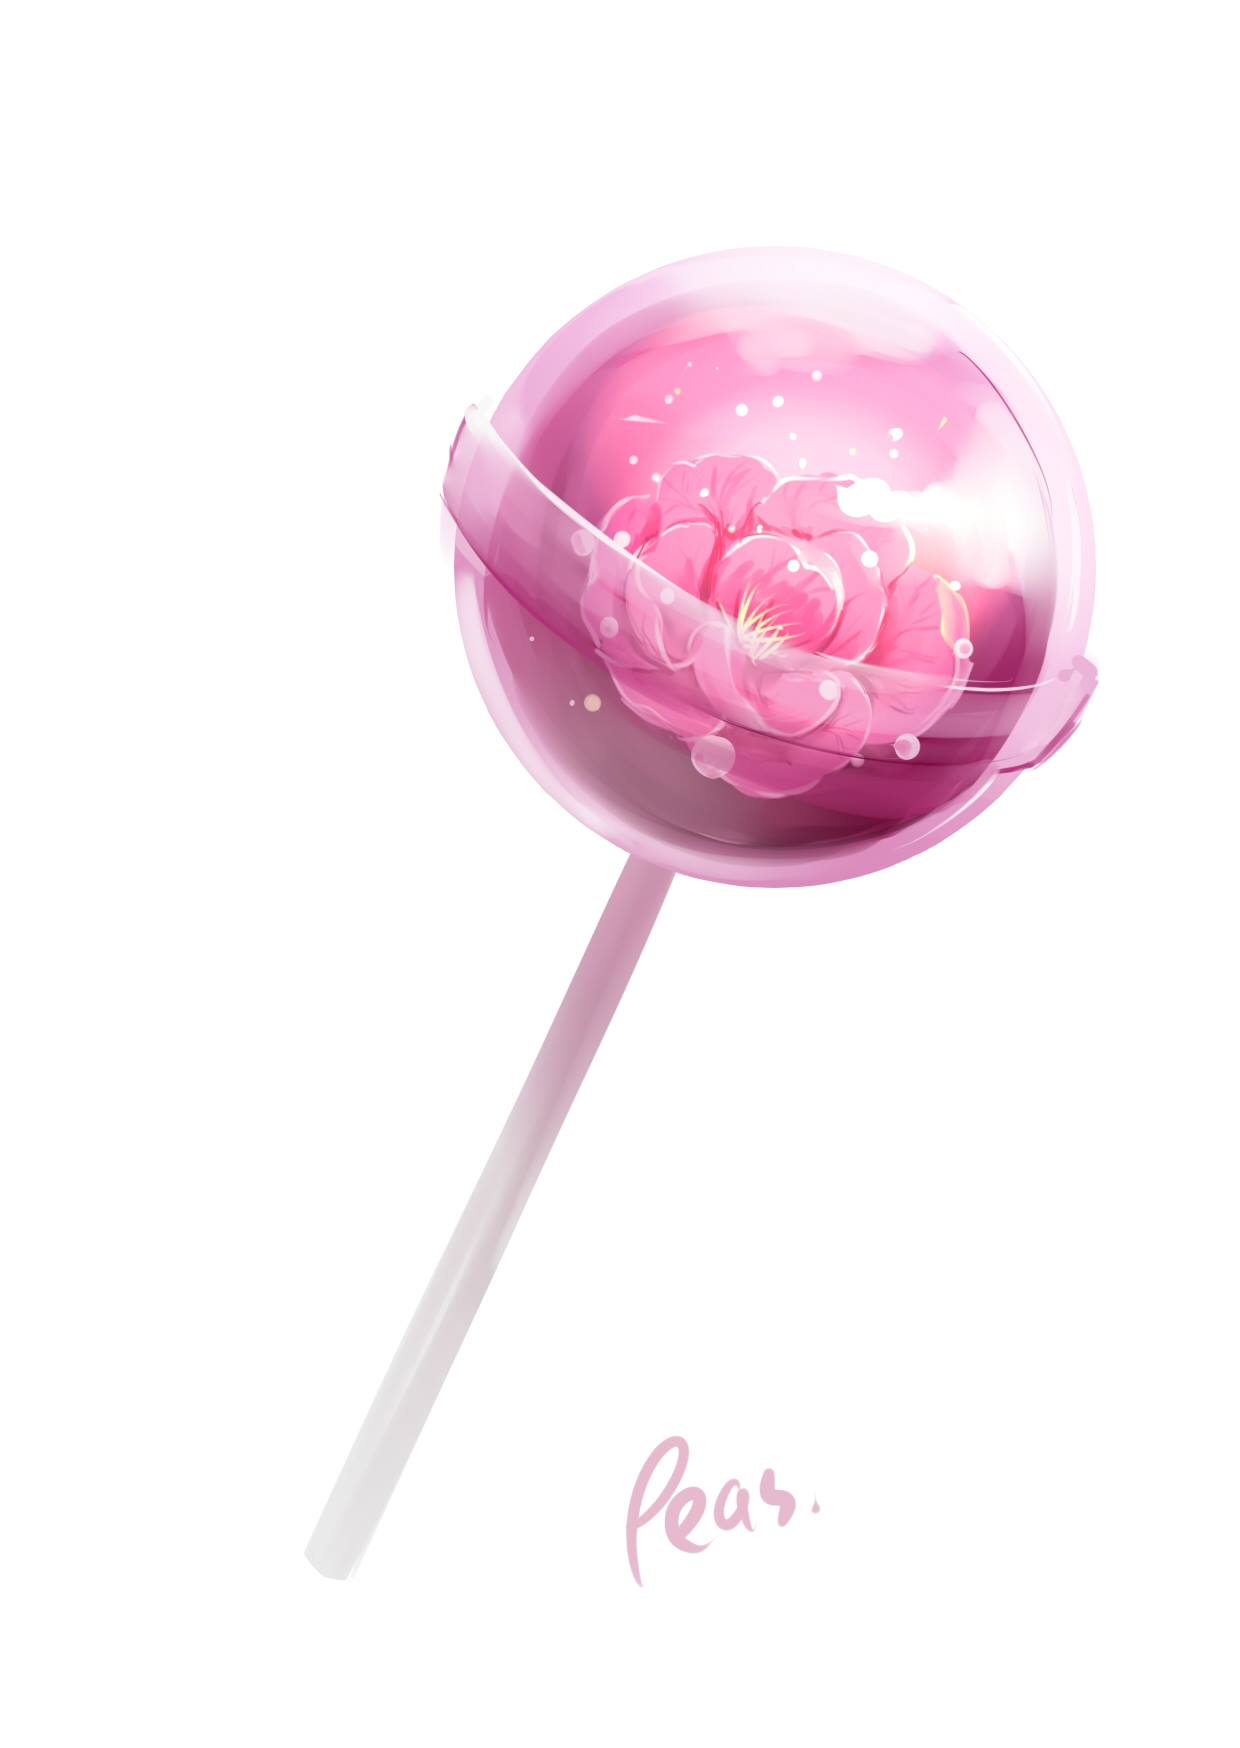 Lollipop.jpg